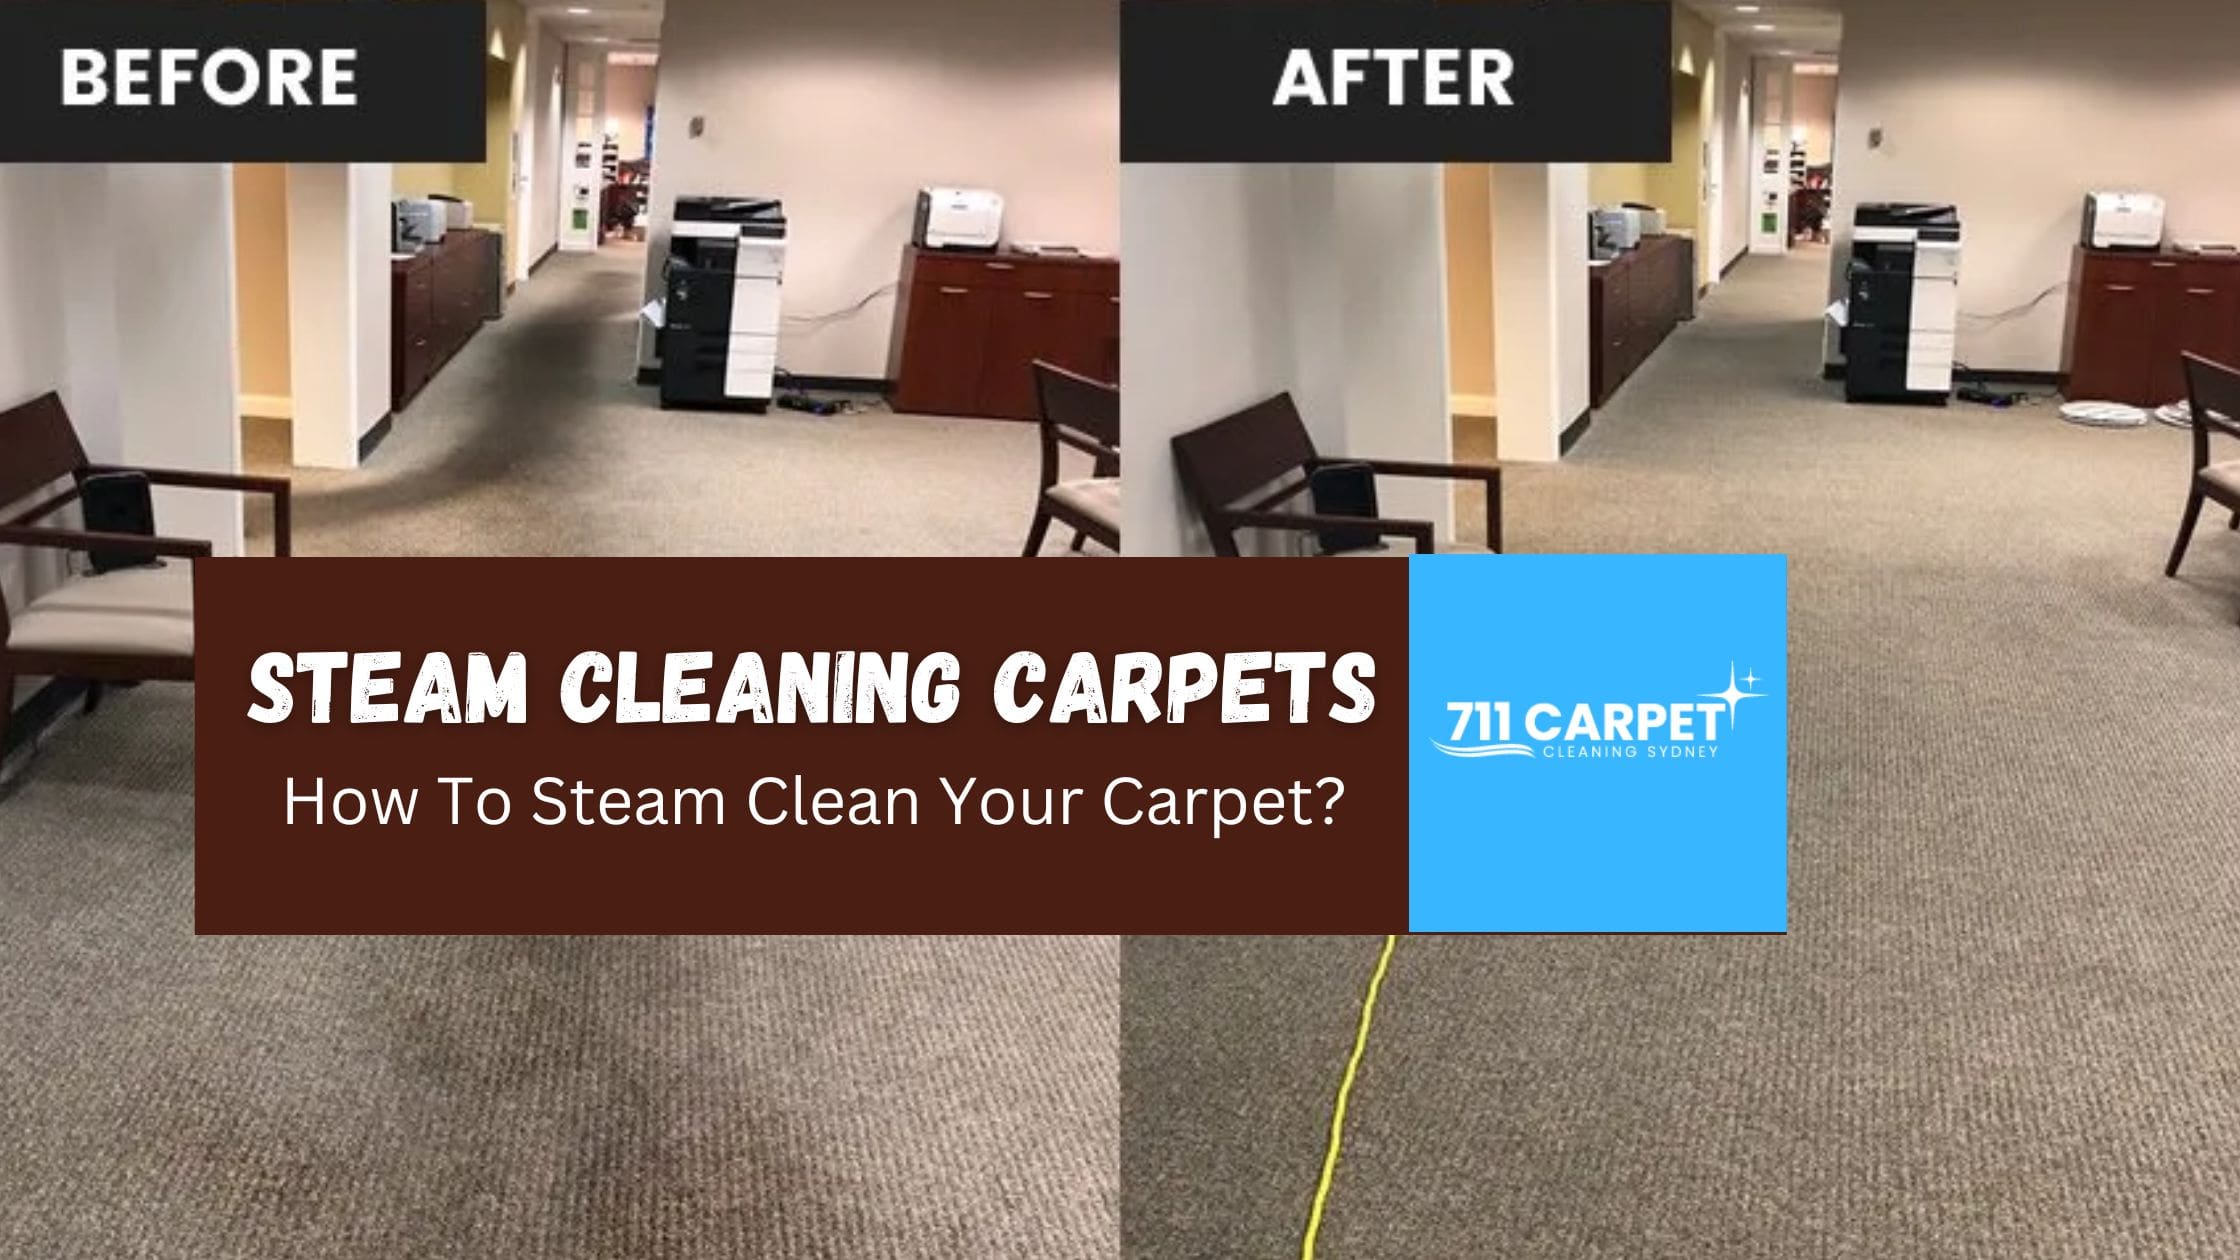 Steps To Steam Clean Carpets